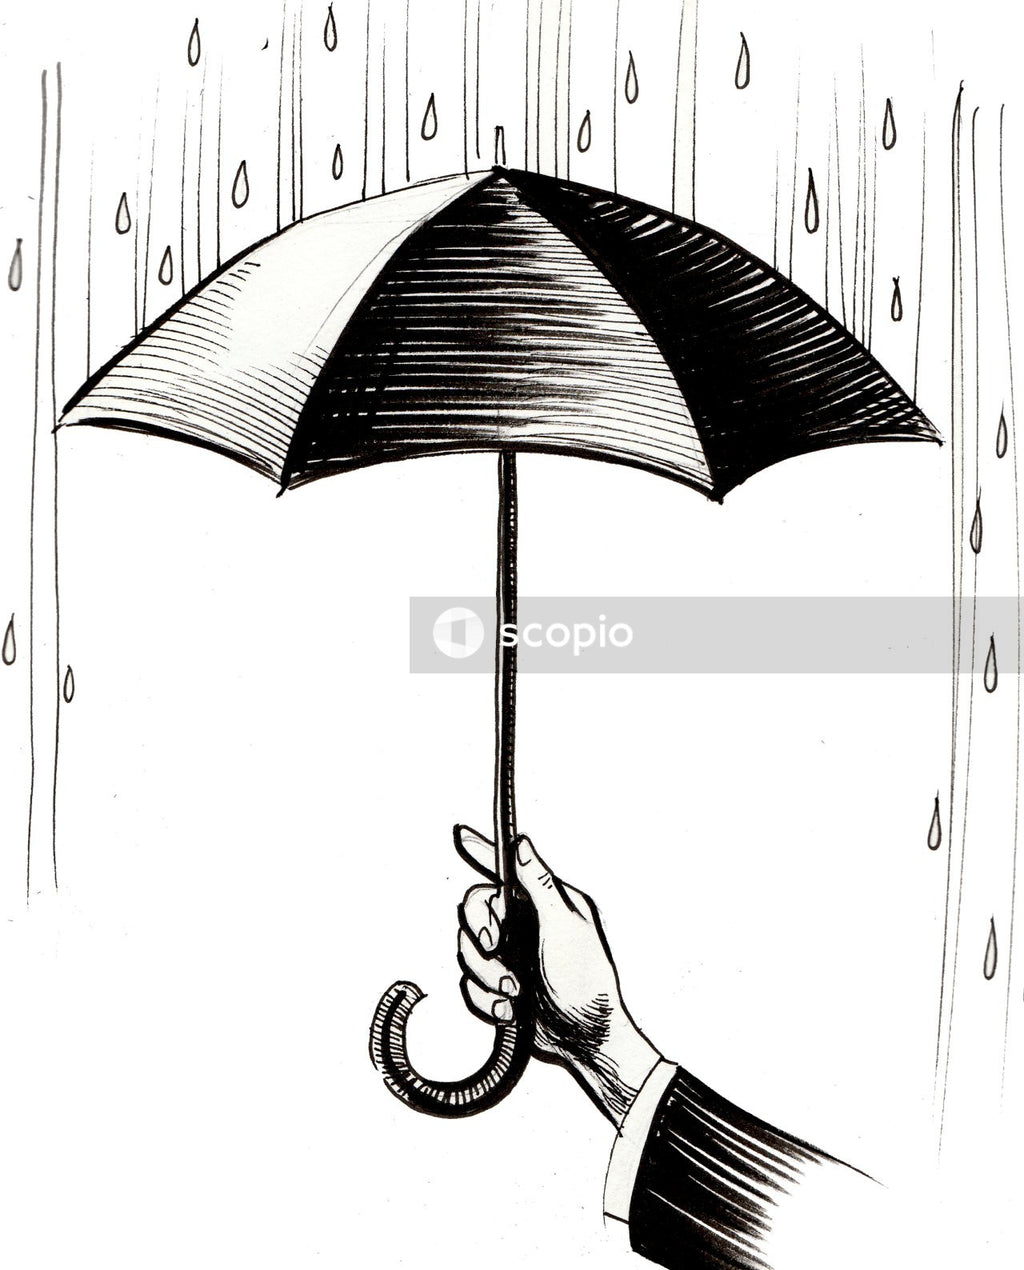 Woman holding umbrella sketch illustration